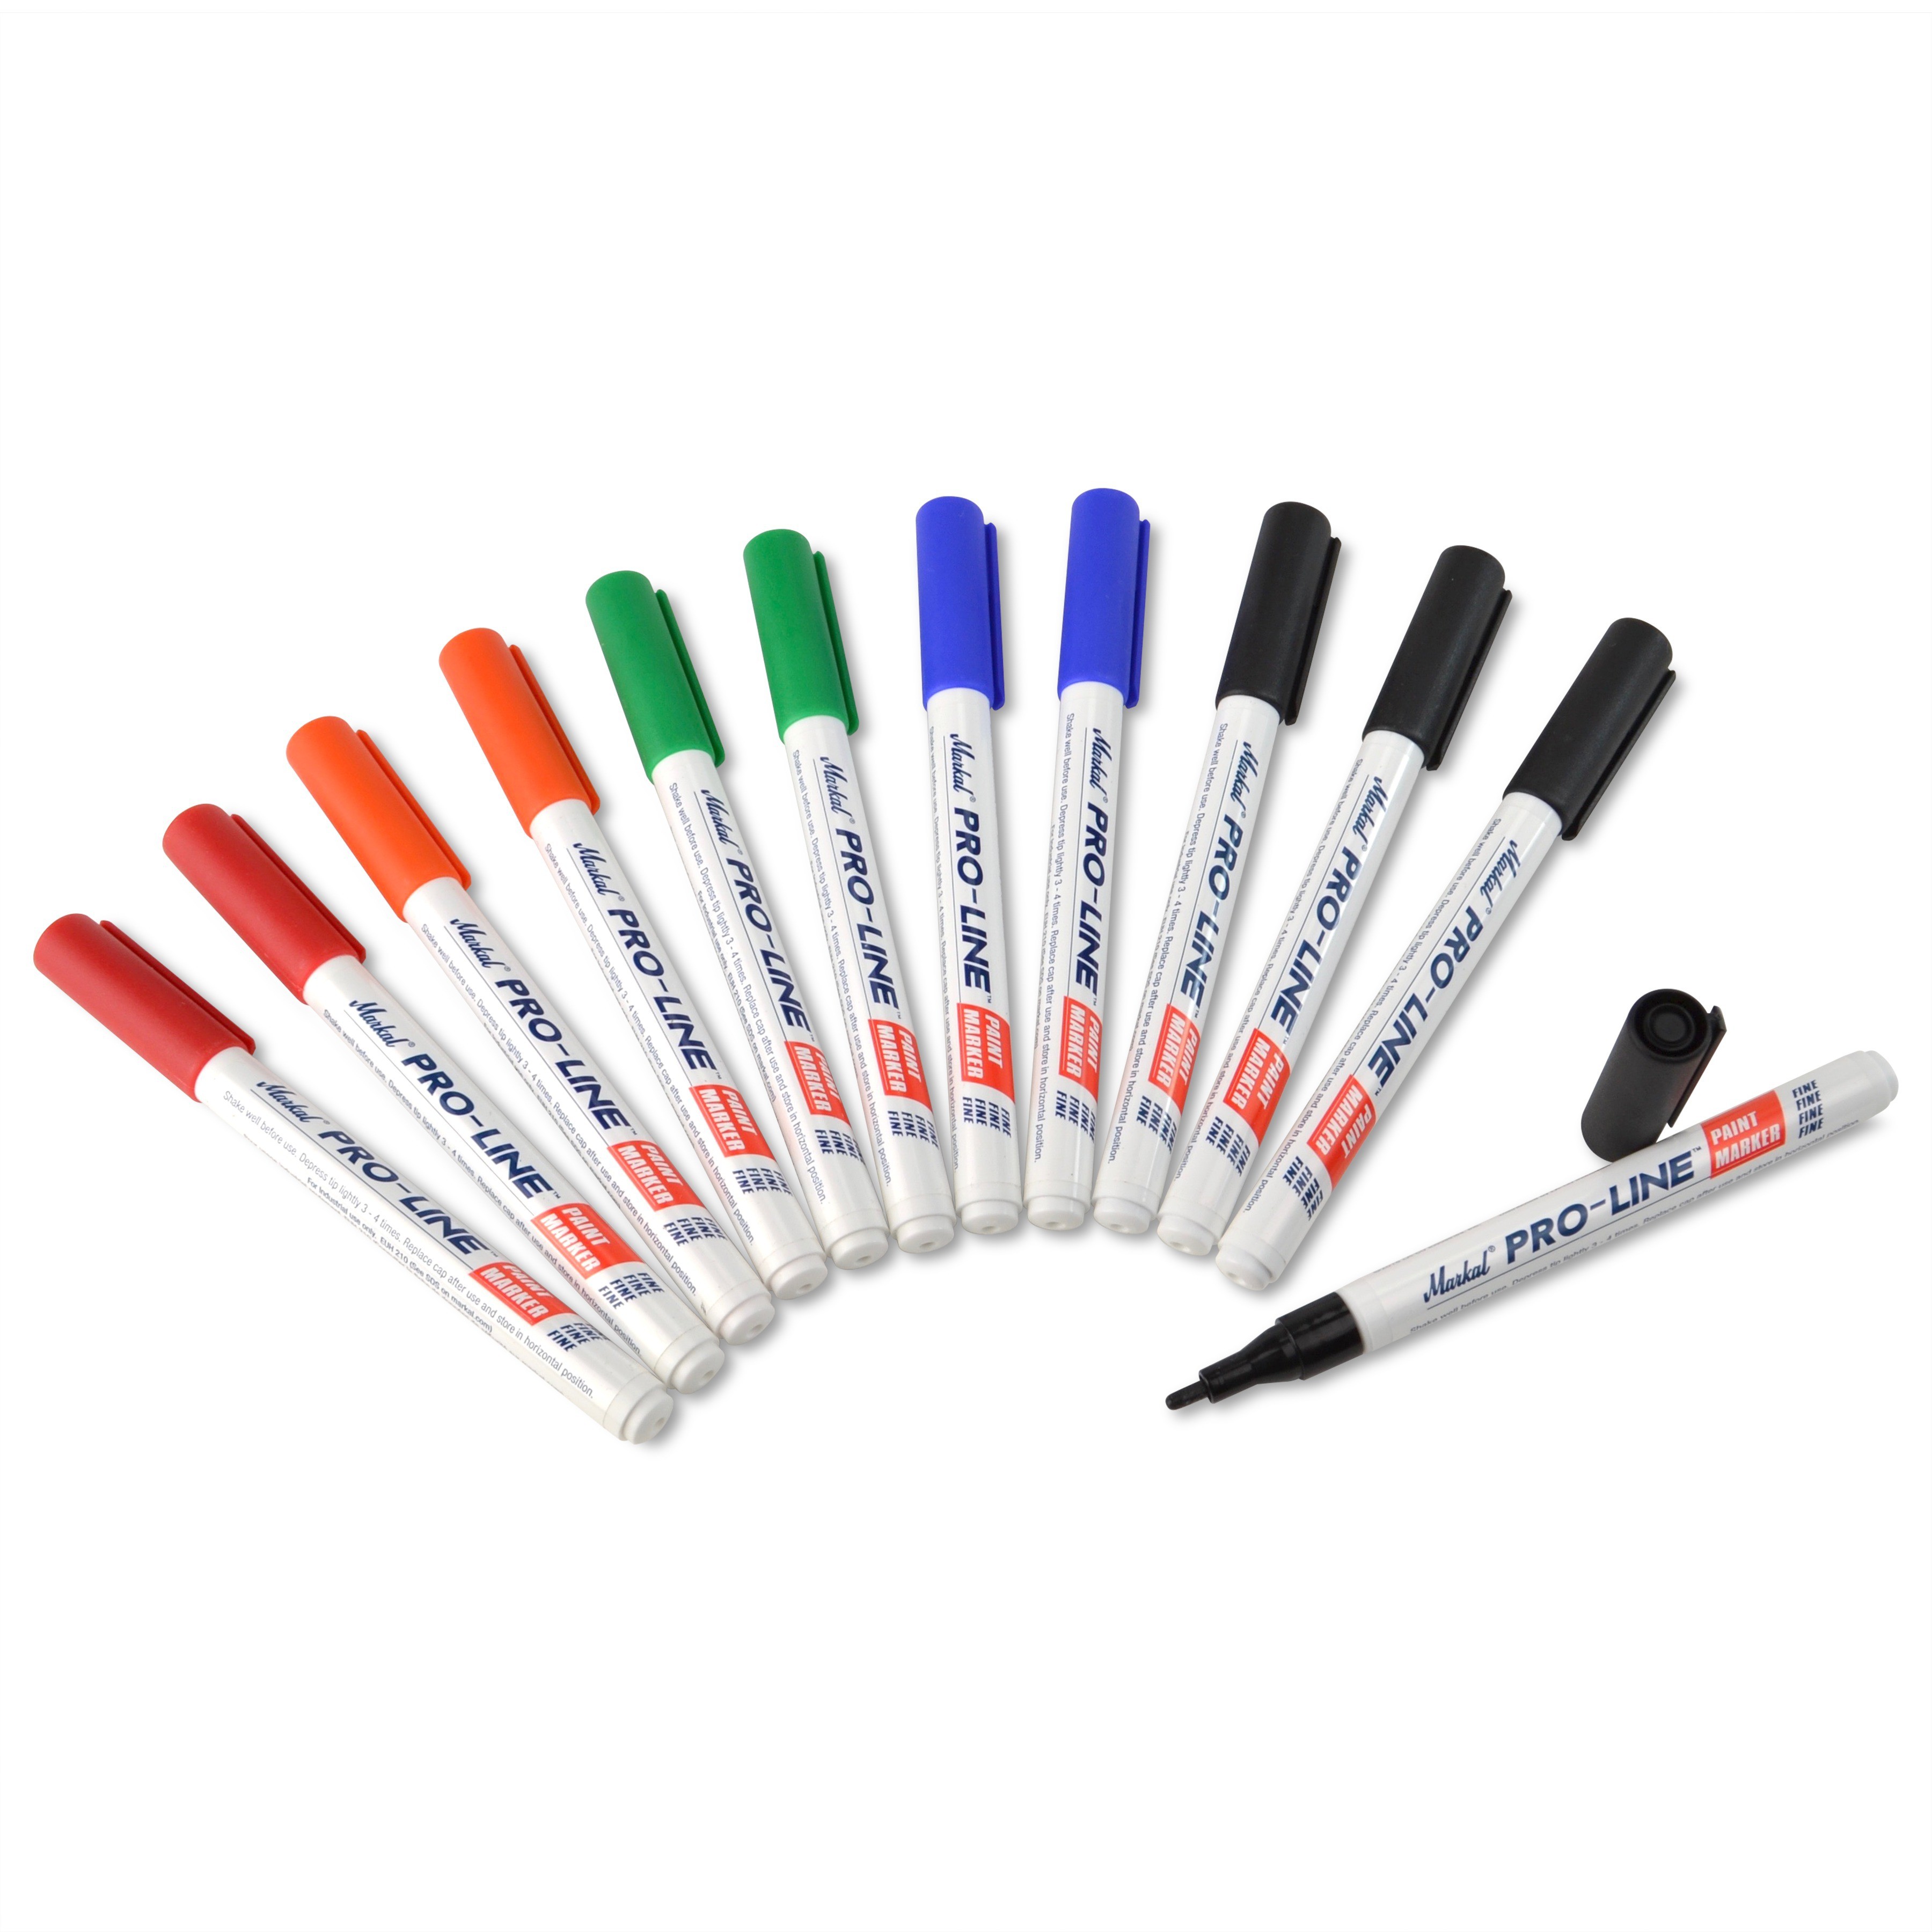 SP Bel-Art Solvent-Based Paint Pen Markers; 5 Color Assortment (Pack of 12)